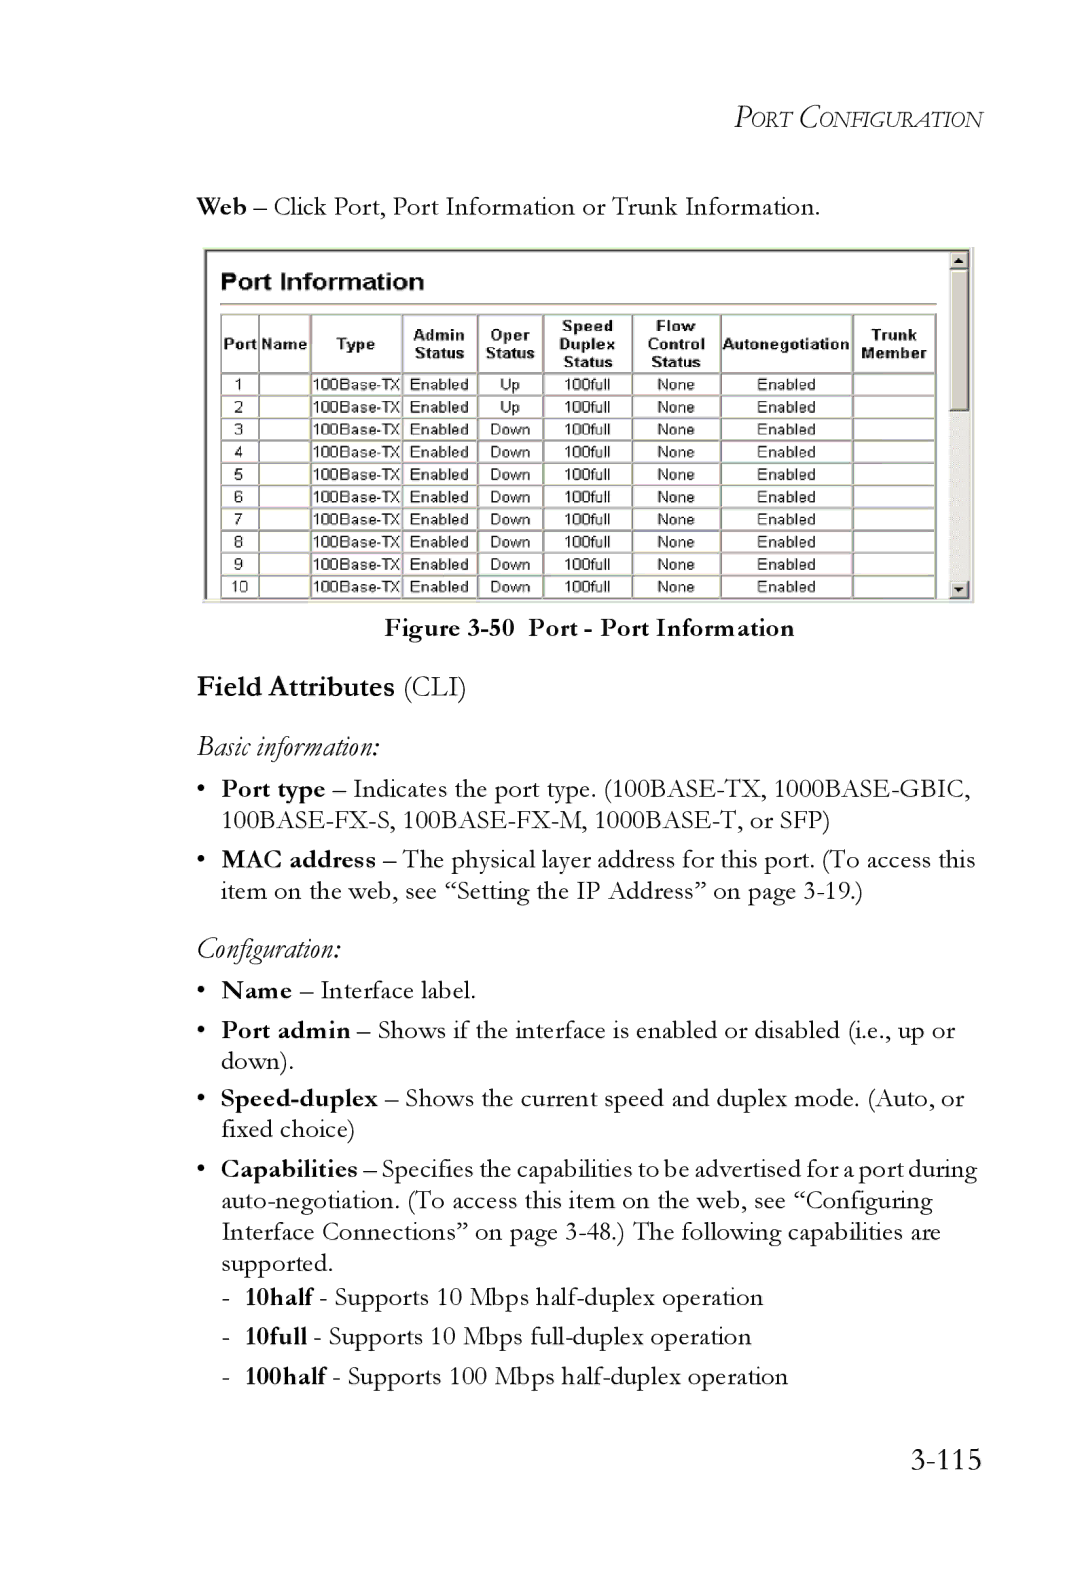 SMC Networks SMC6824M manual 115, Field Attributes CLI, Web Click Port, Port Information or Trunk Information 